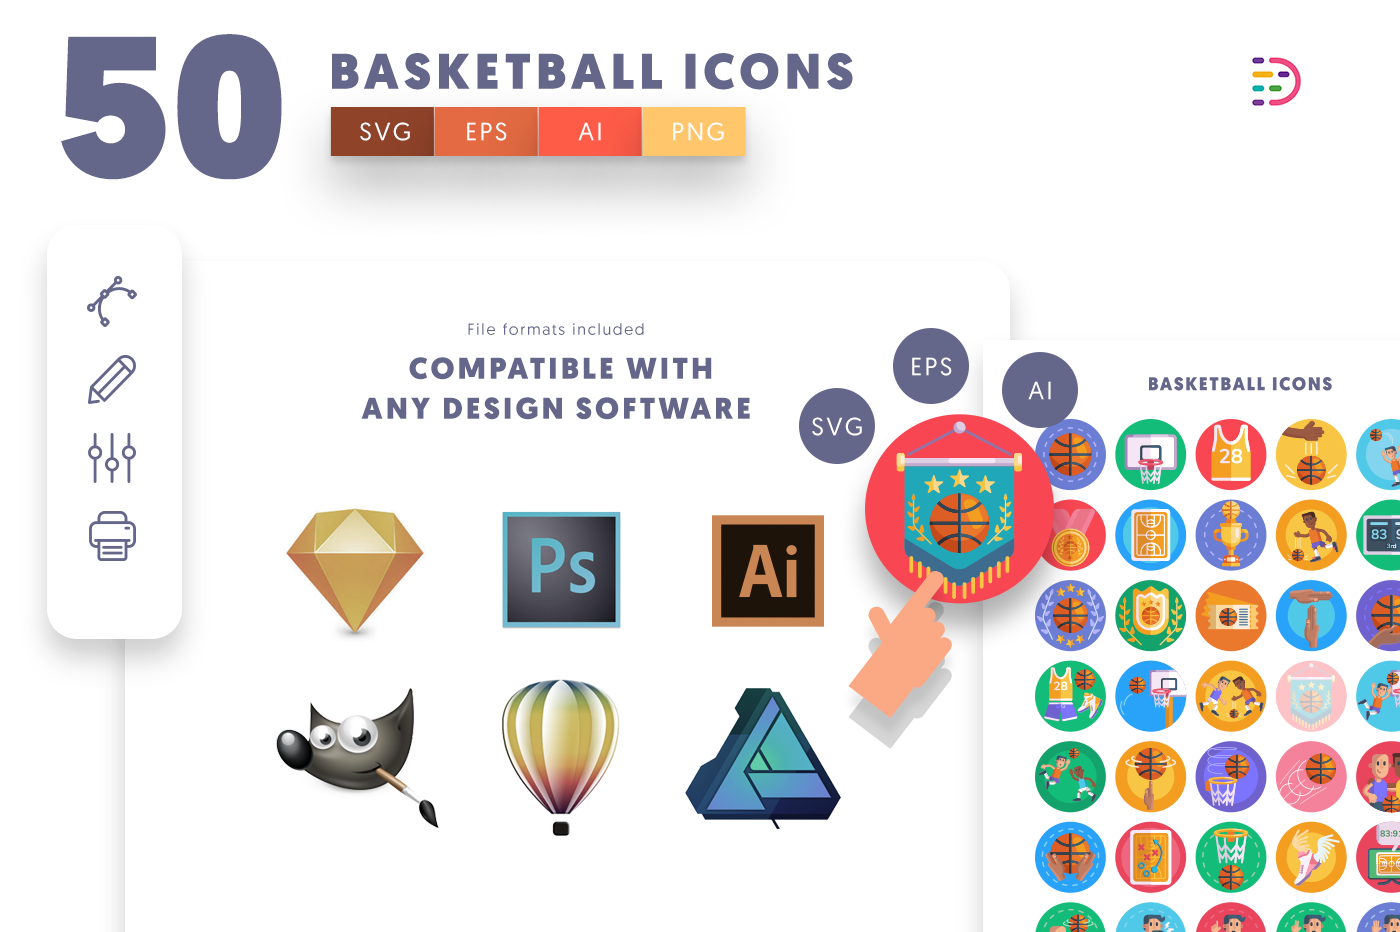  full vector Basketball Icons 